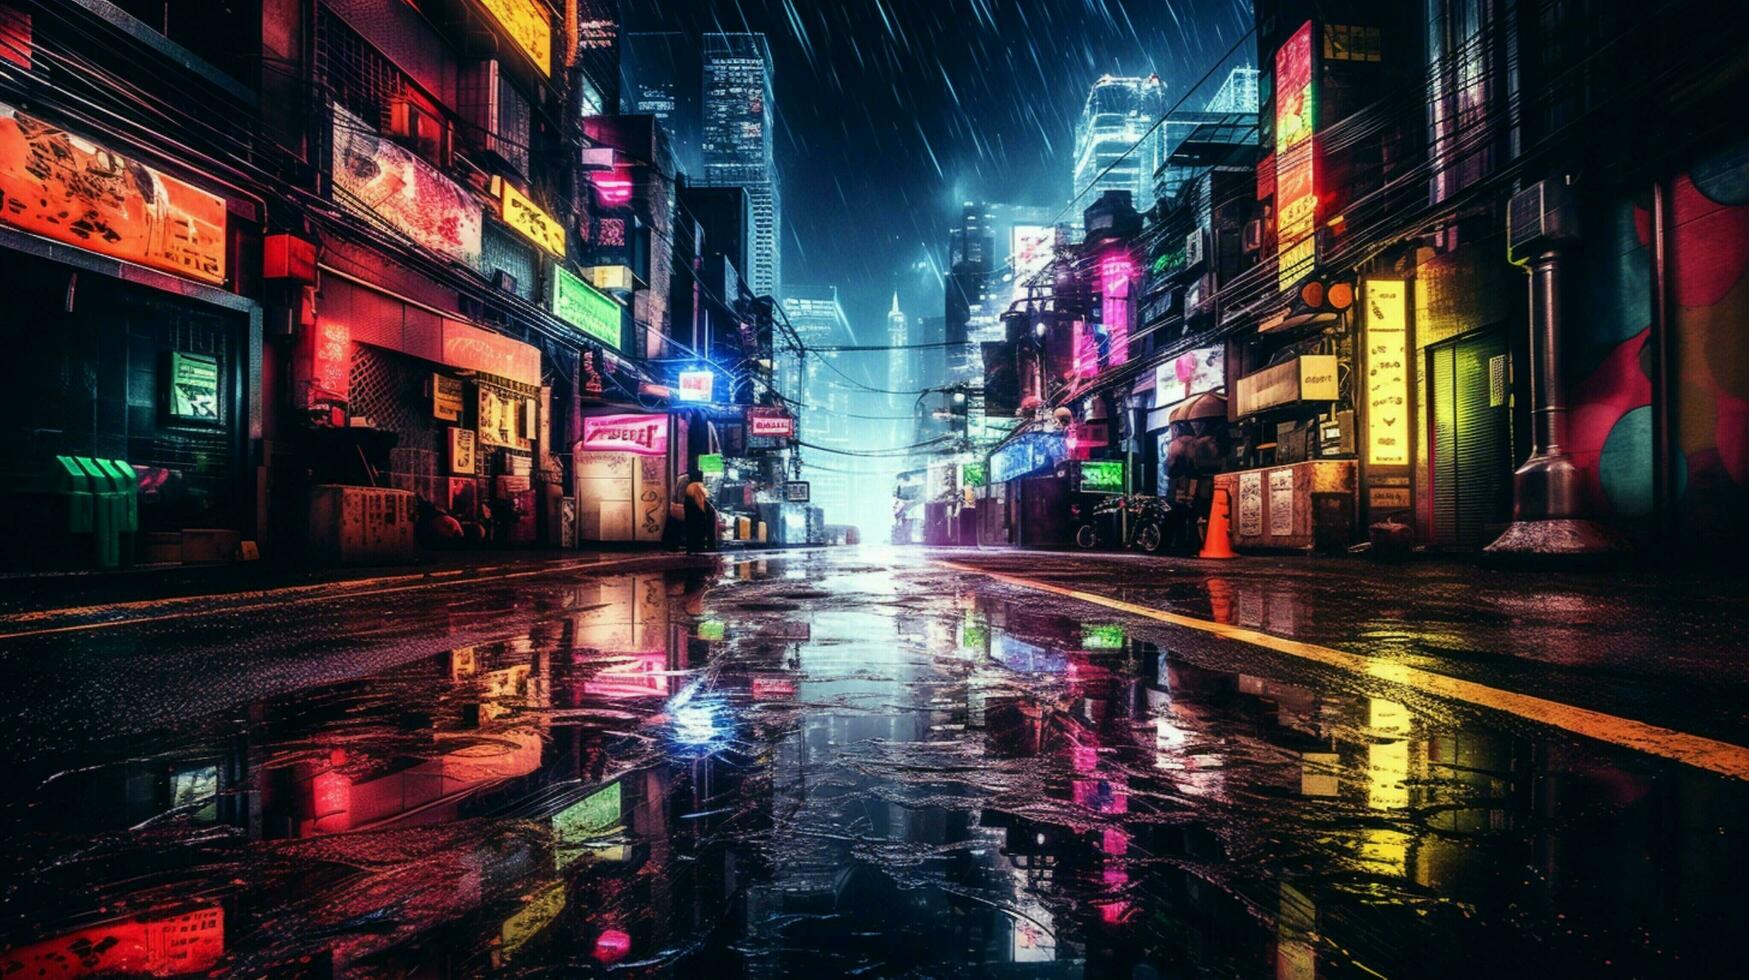 vibrant colors illuminate dirty city streets at night photo